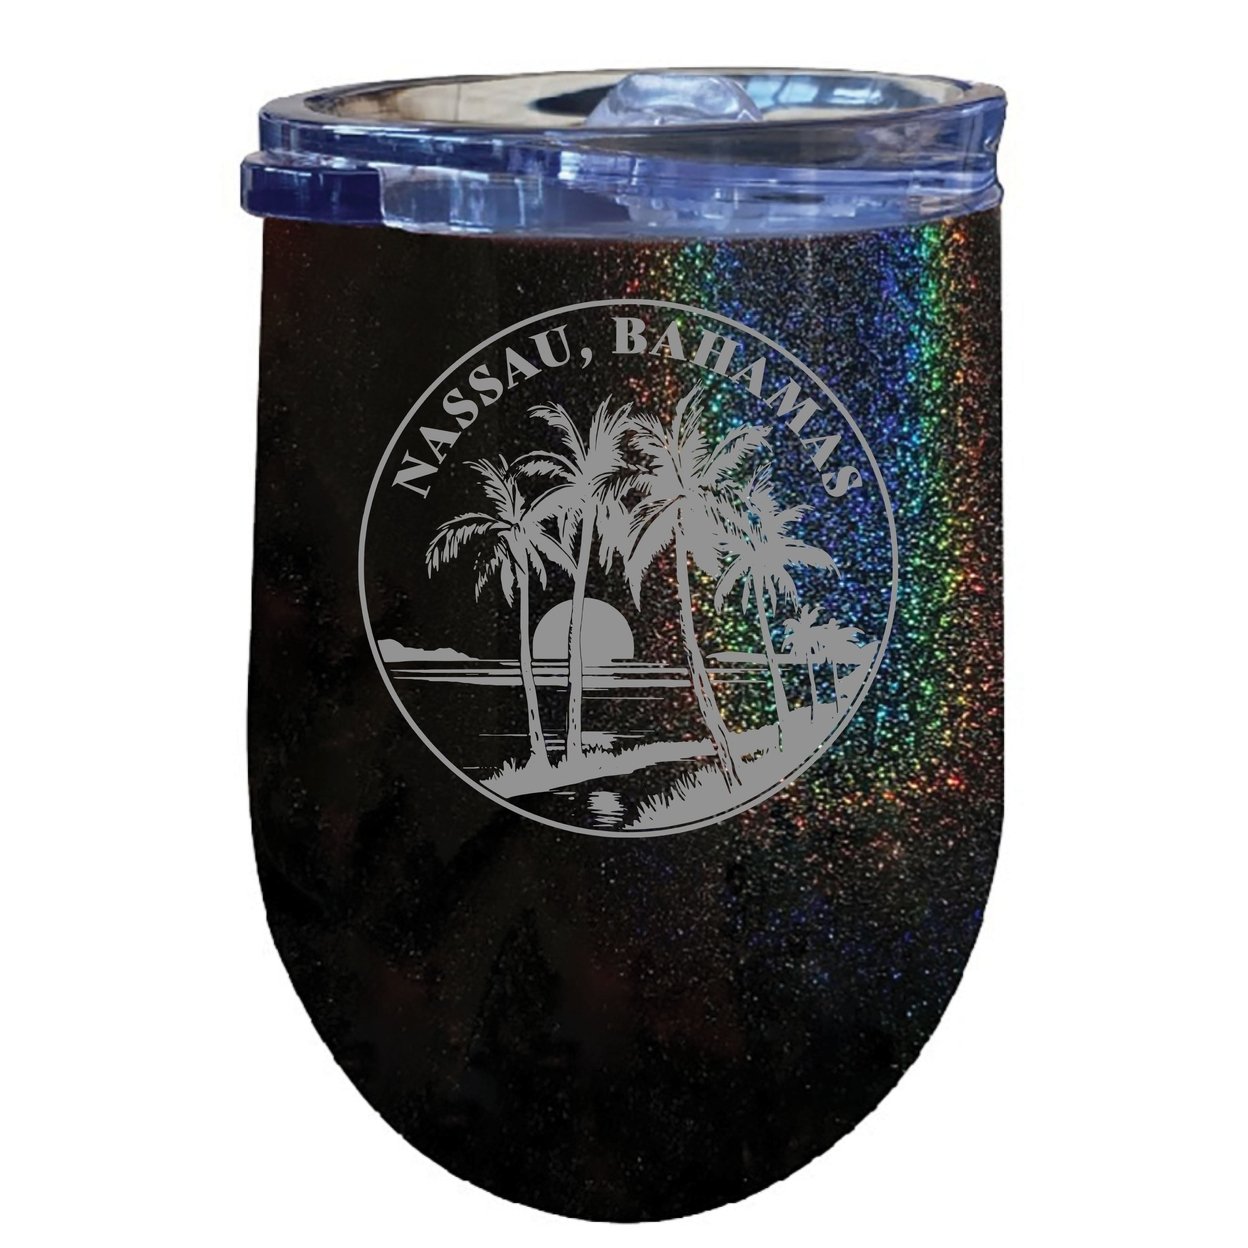 Nassau The Bahamas Souvenir 12 Oz Engraved Insulated Wine Stainless Steel Tumbler - Rainbow Glitter Gray,,4-Pack